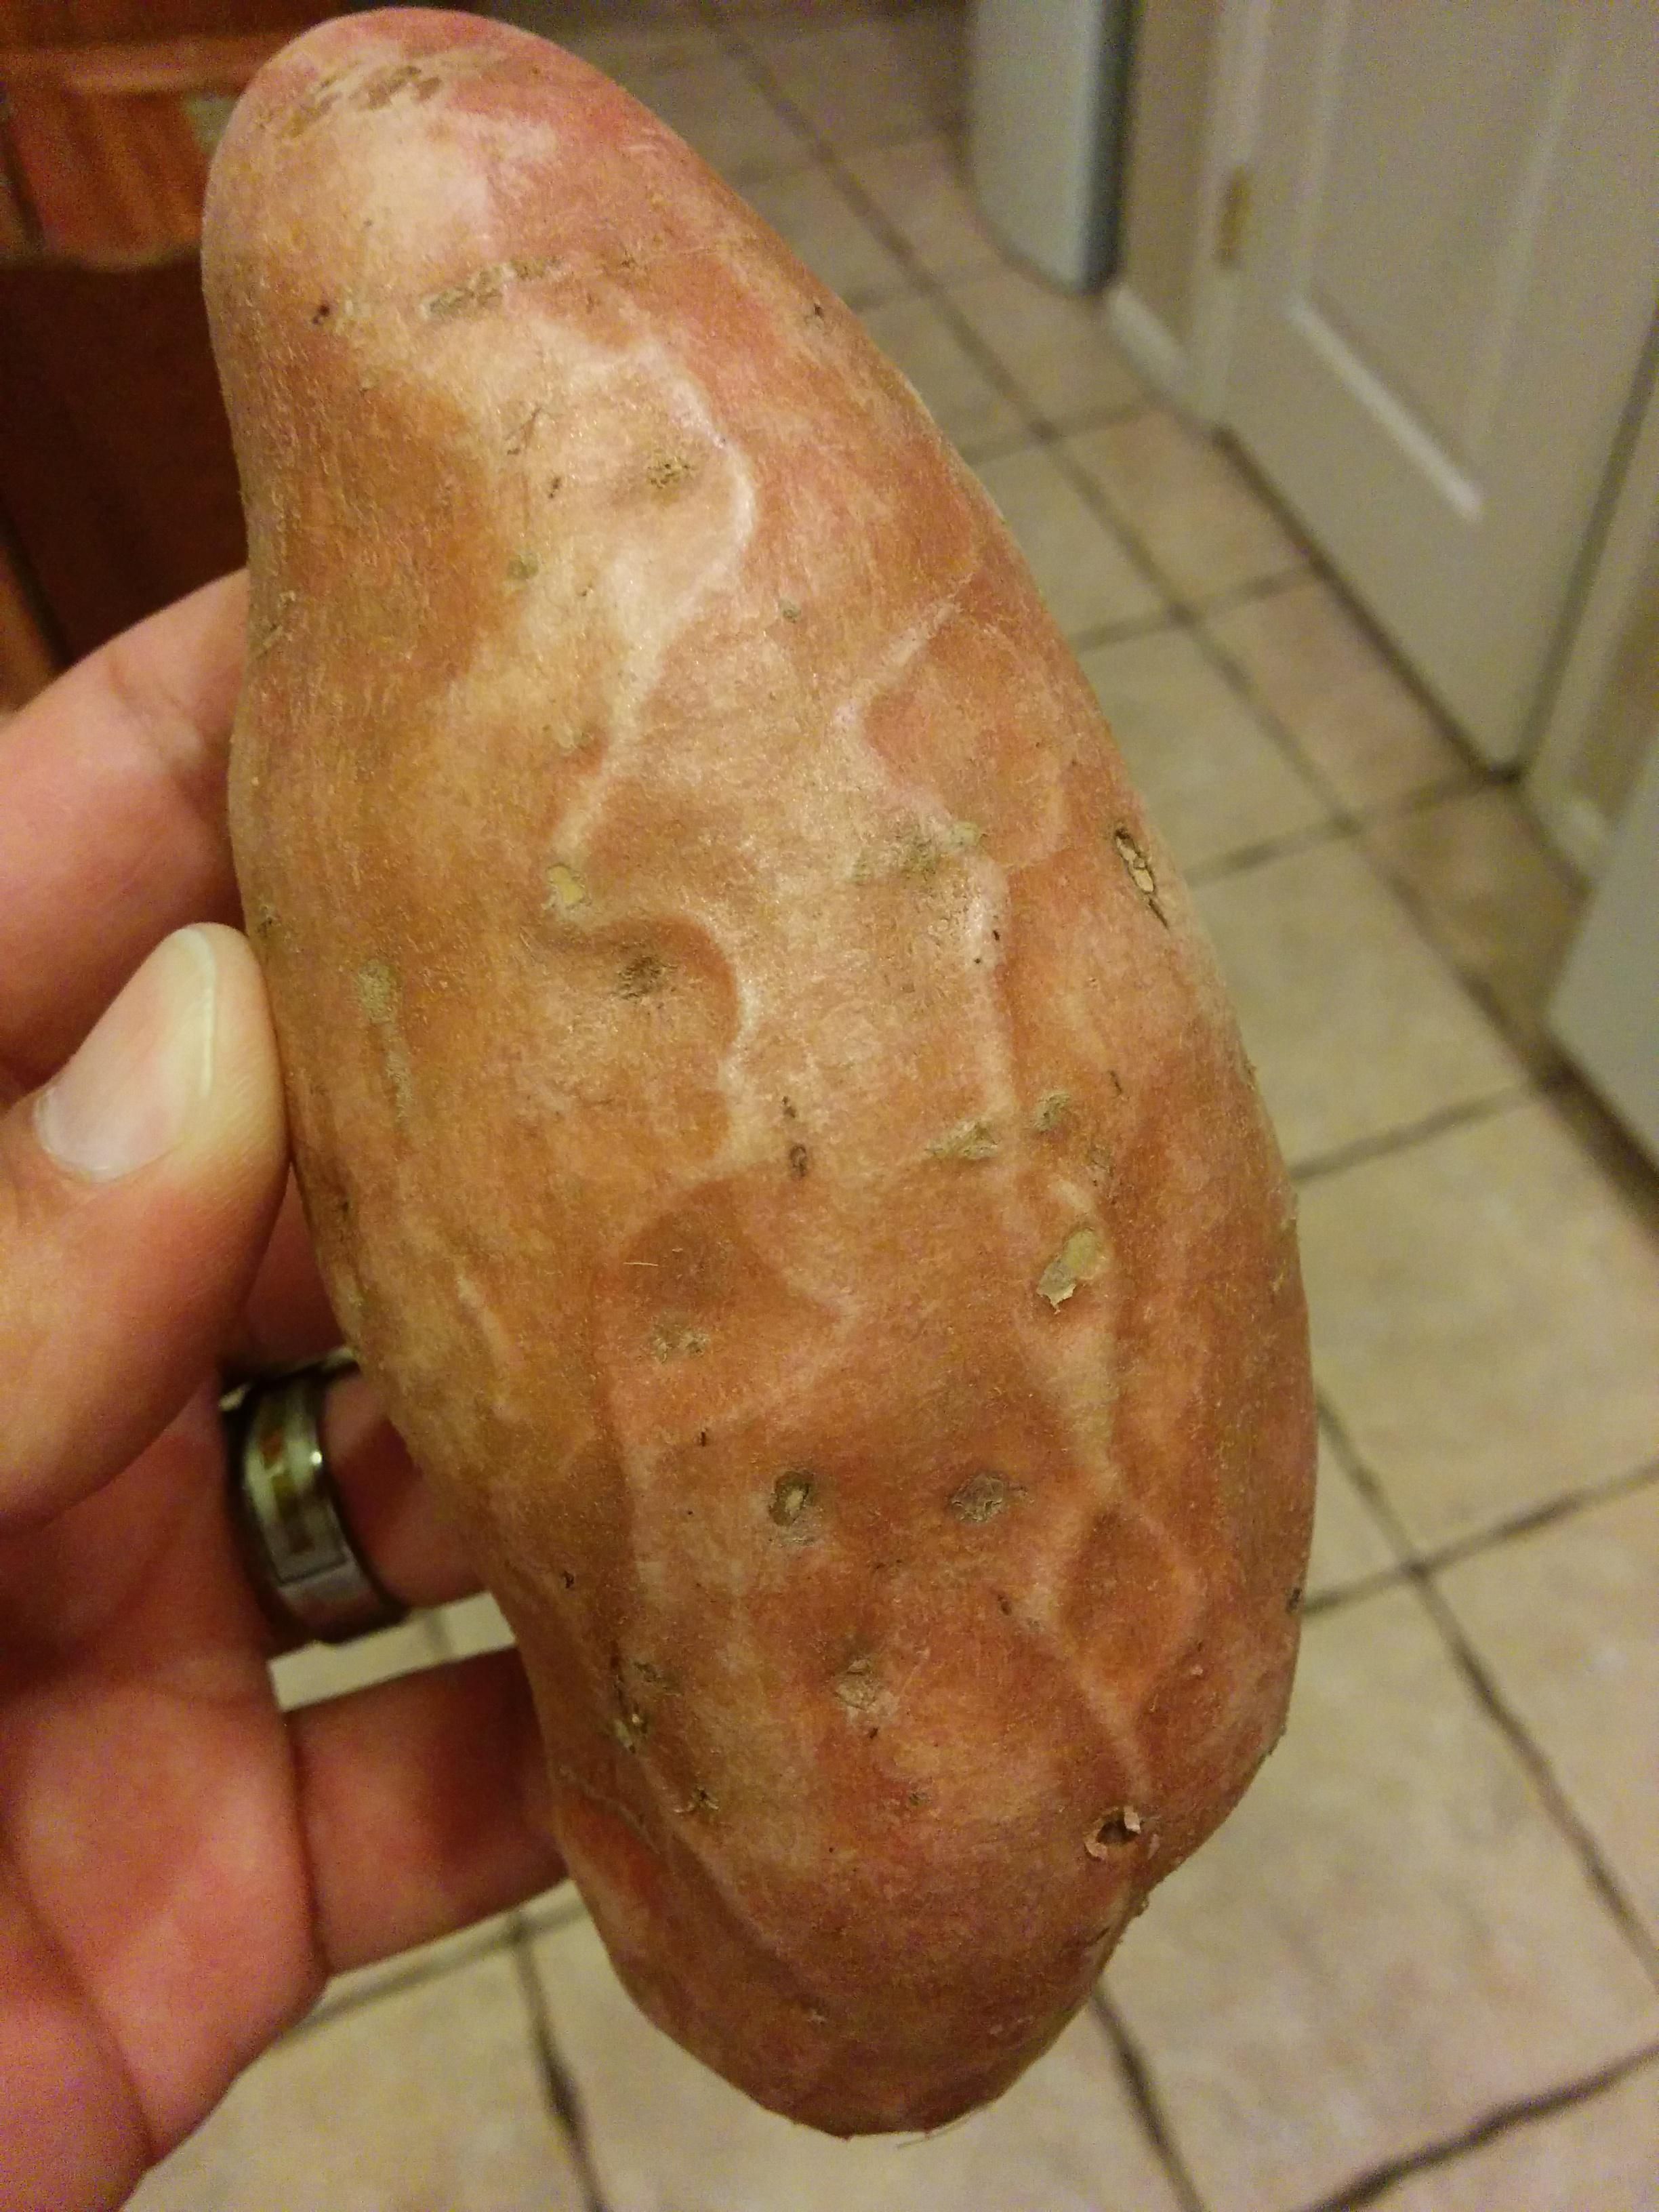 Check out my throbbing potato.